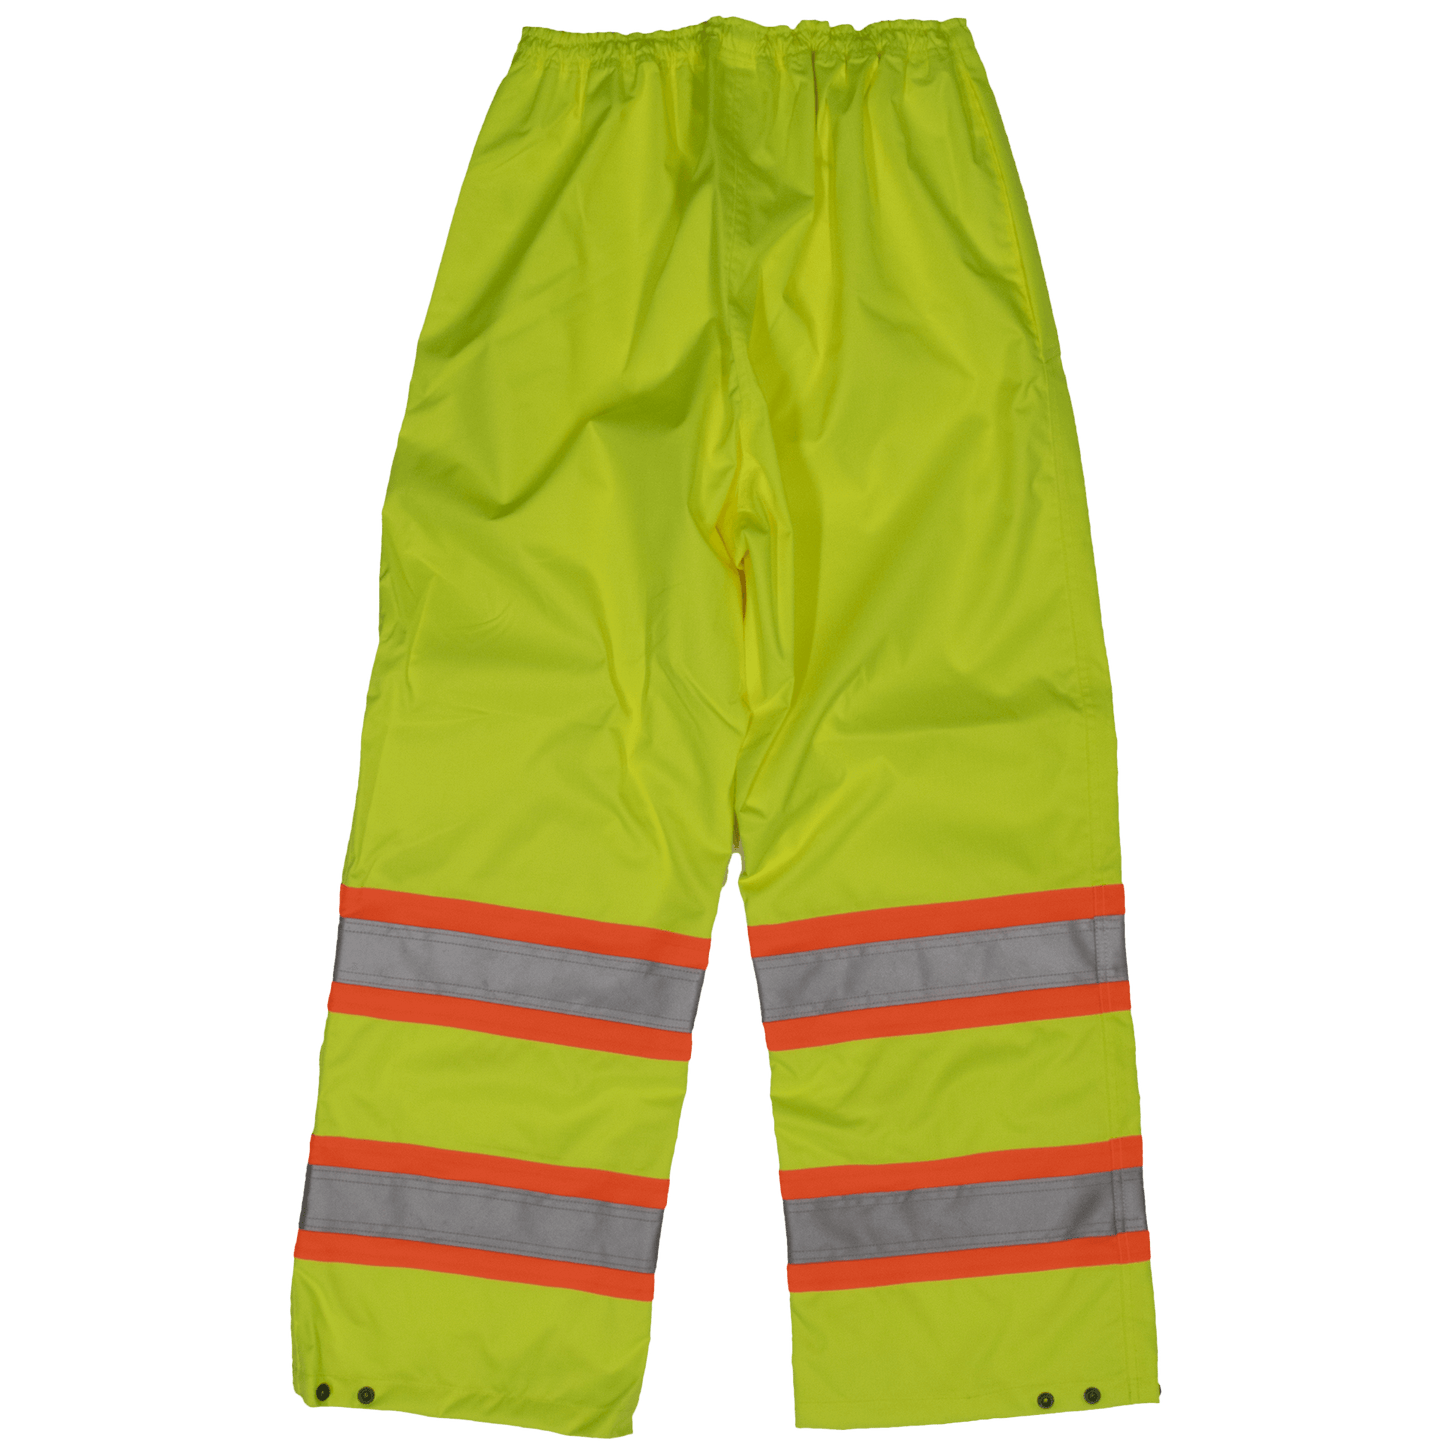 Tough Duck Safety Rain Pant - S374 - Fluorescent Green - back